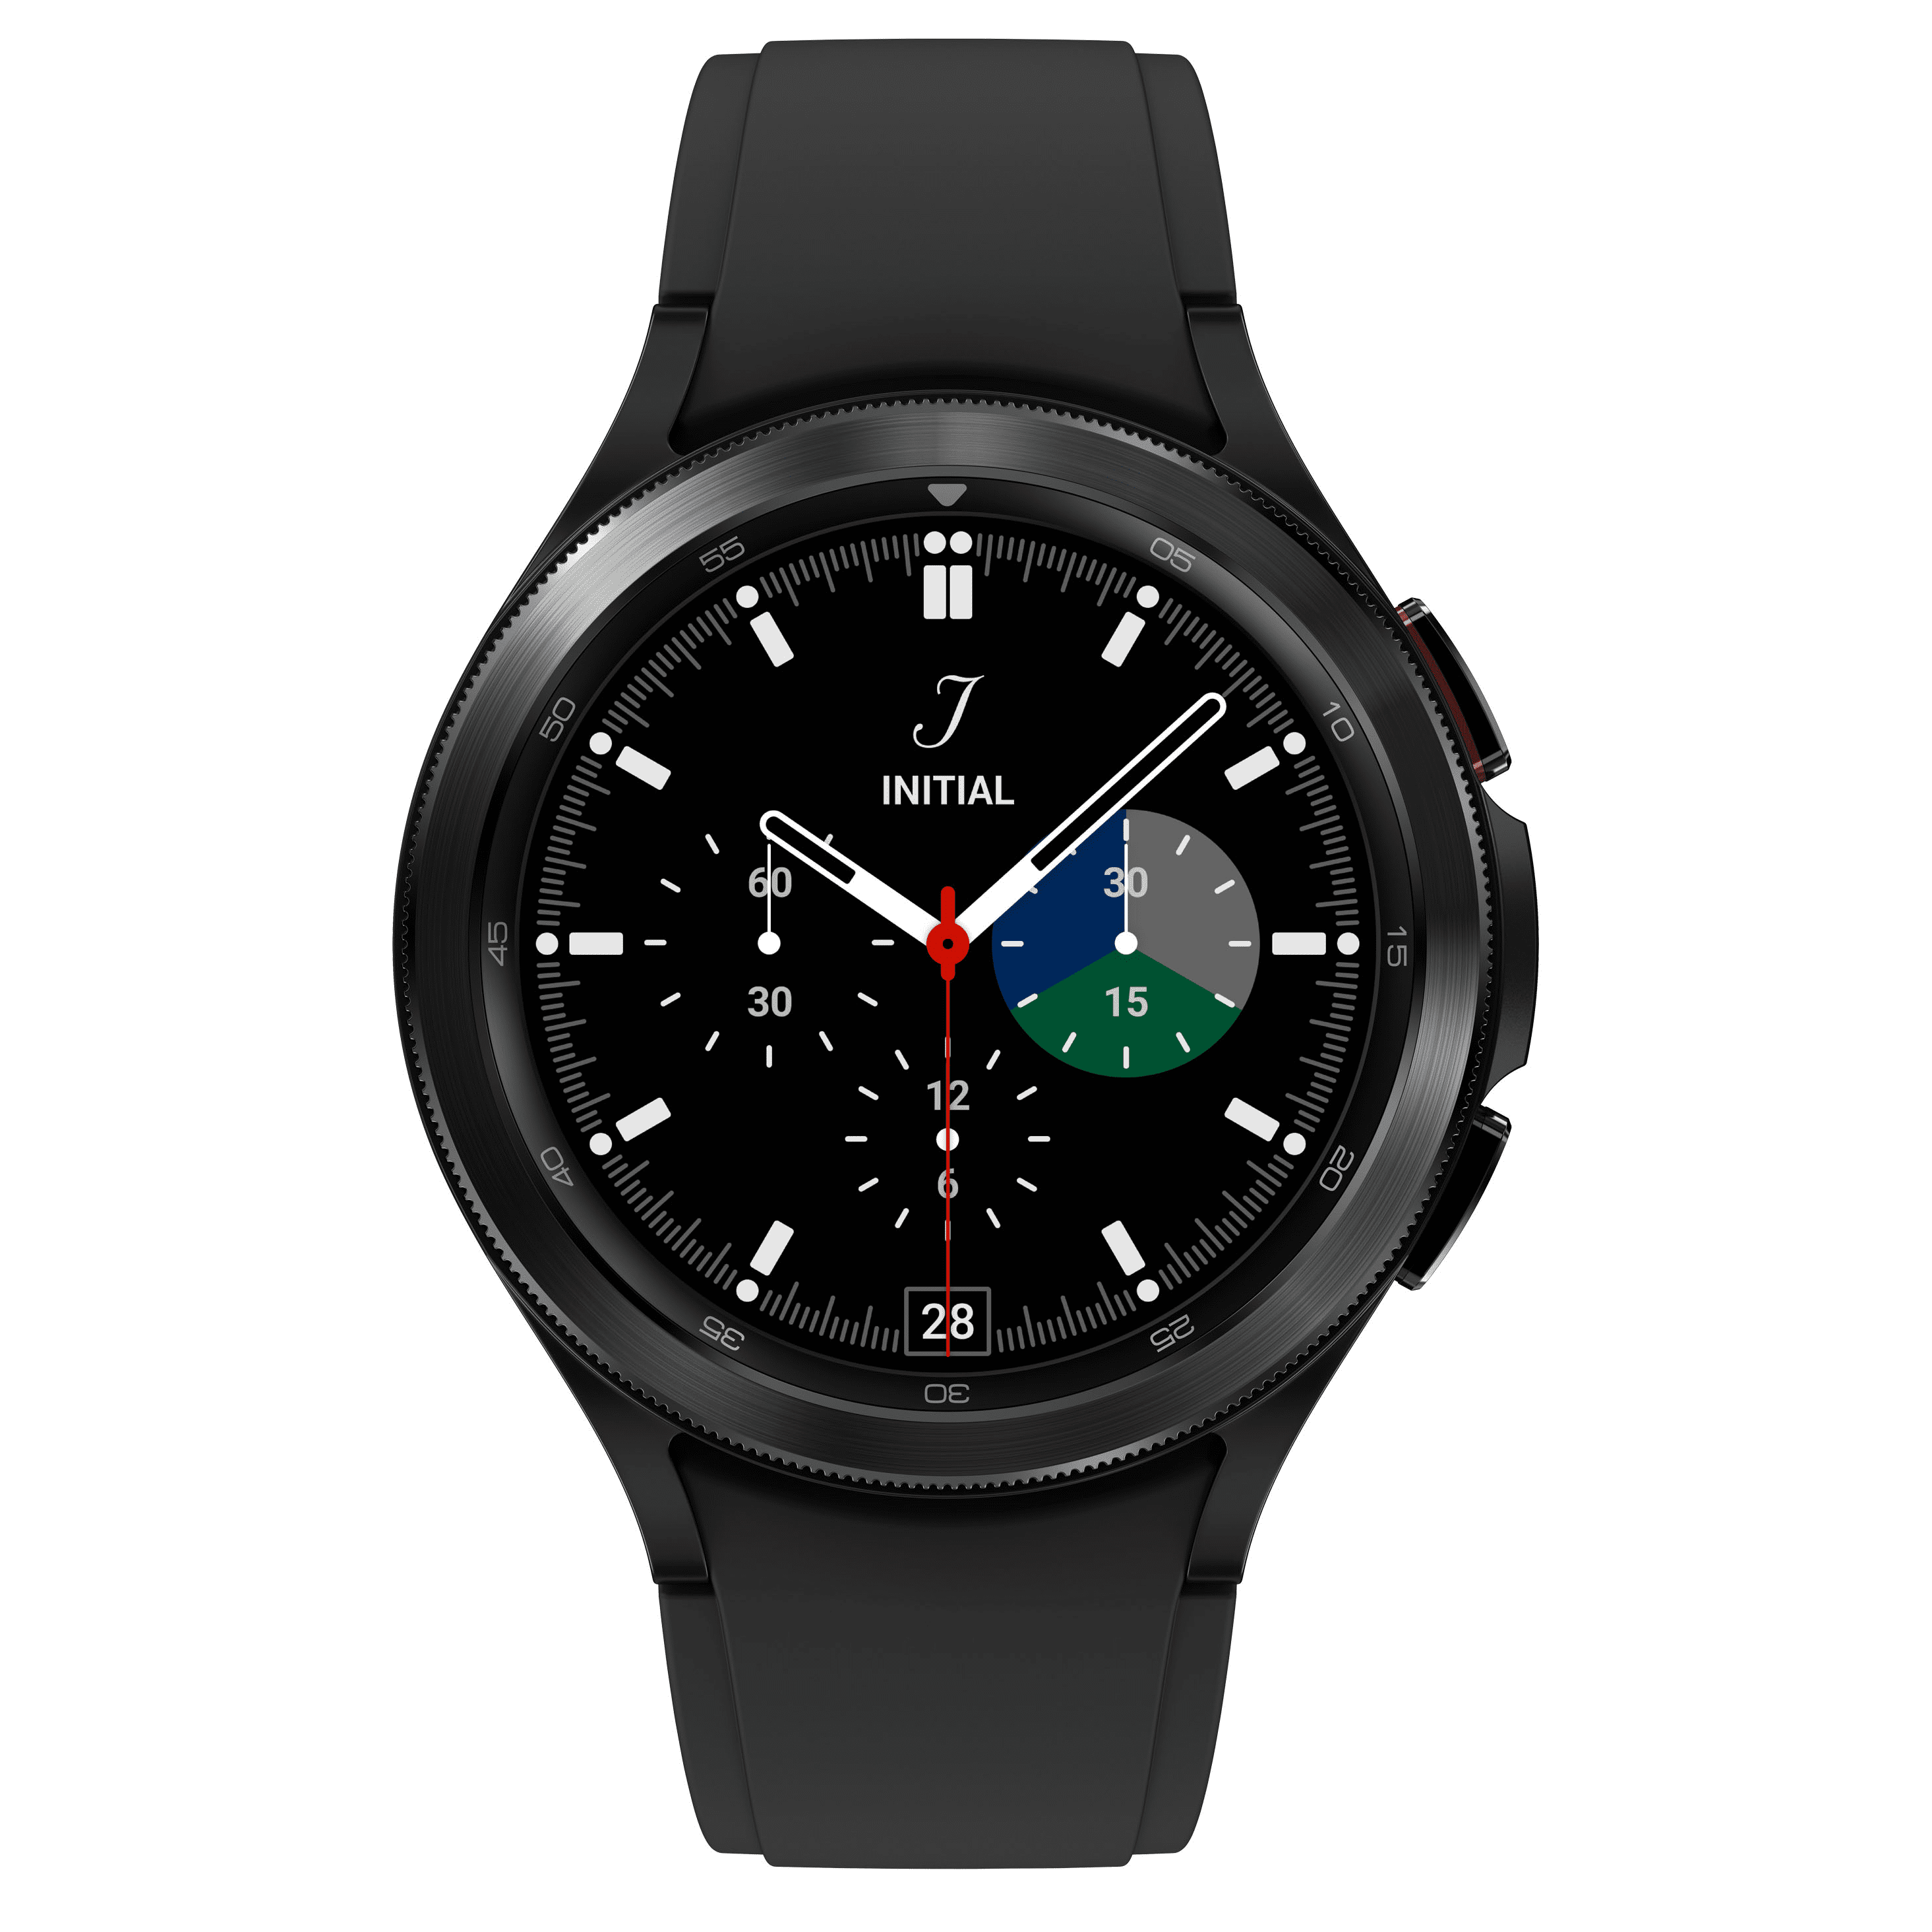 Samsung Galaxy Watch 4 - Wikipedia